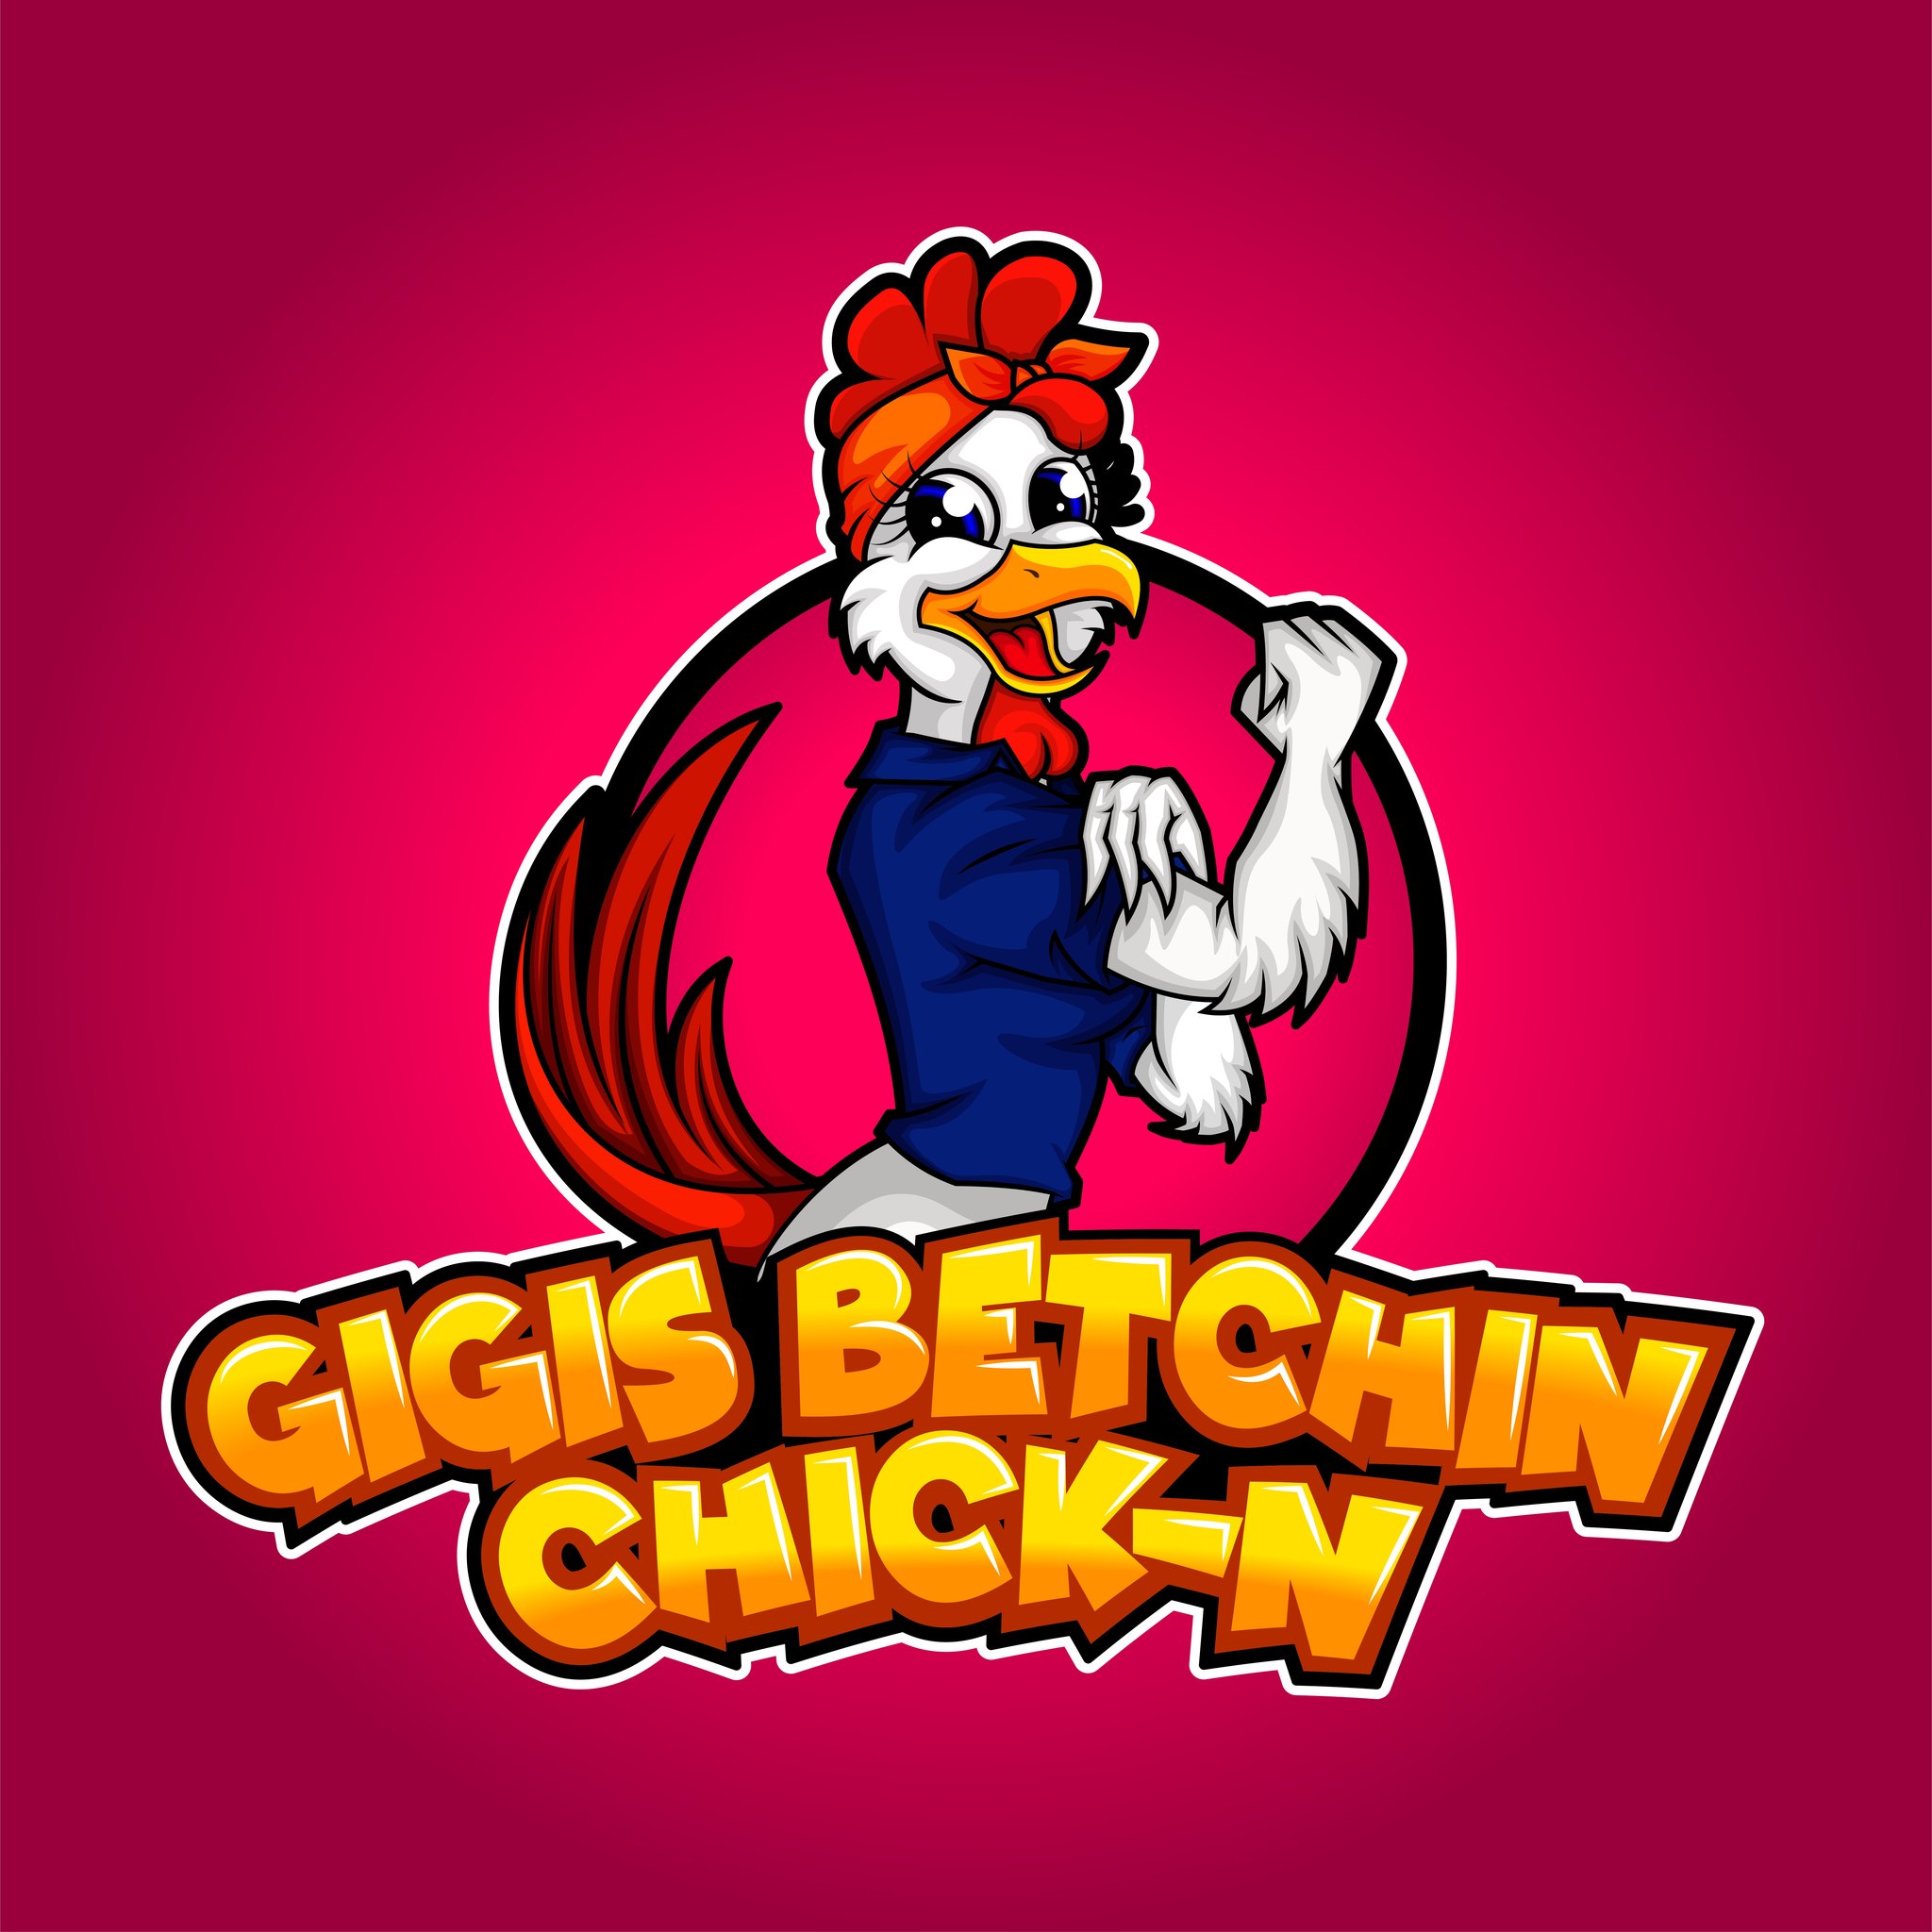 Gigis Betchin Chick-N logo